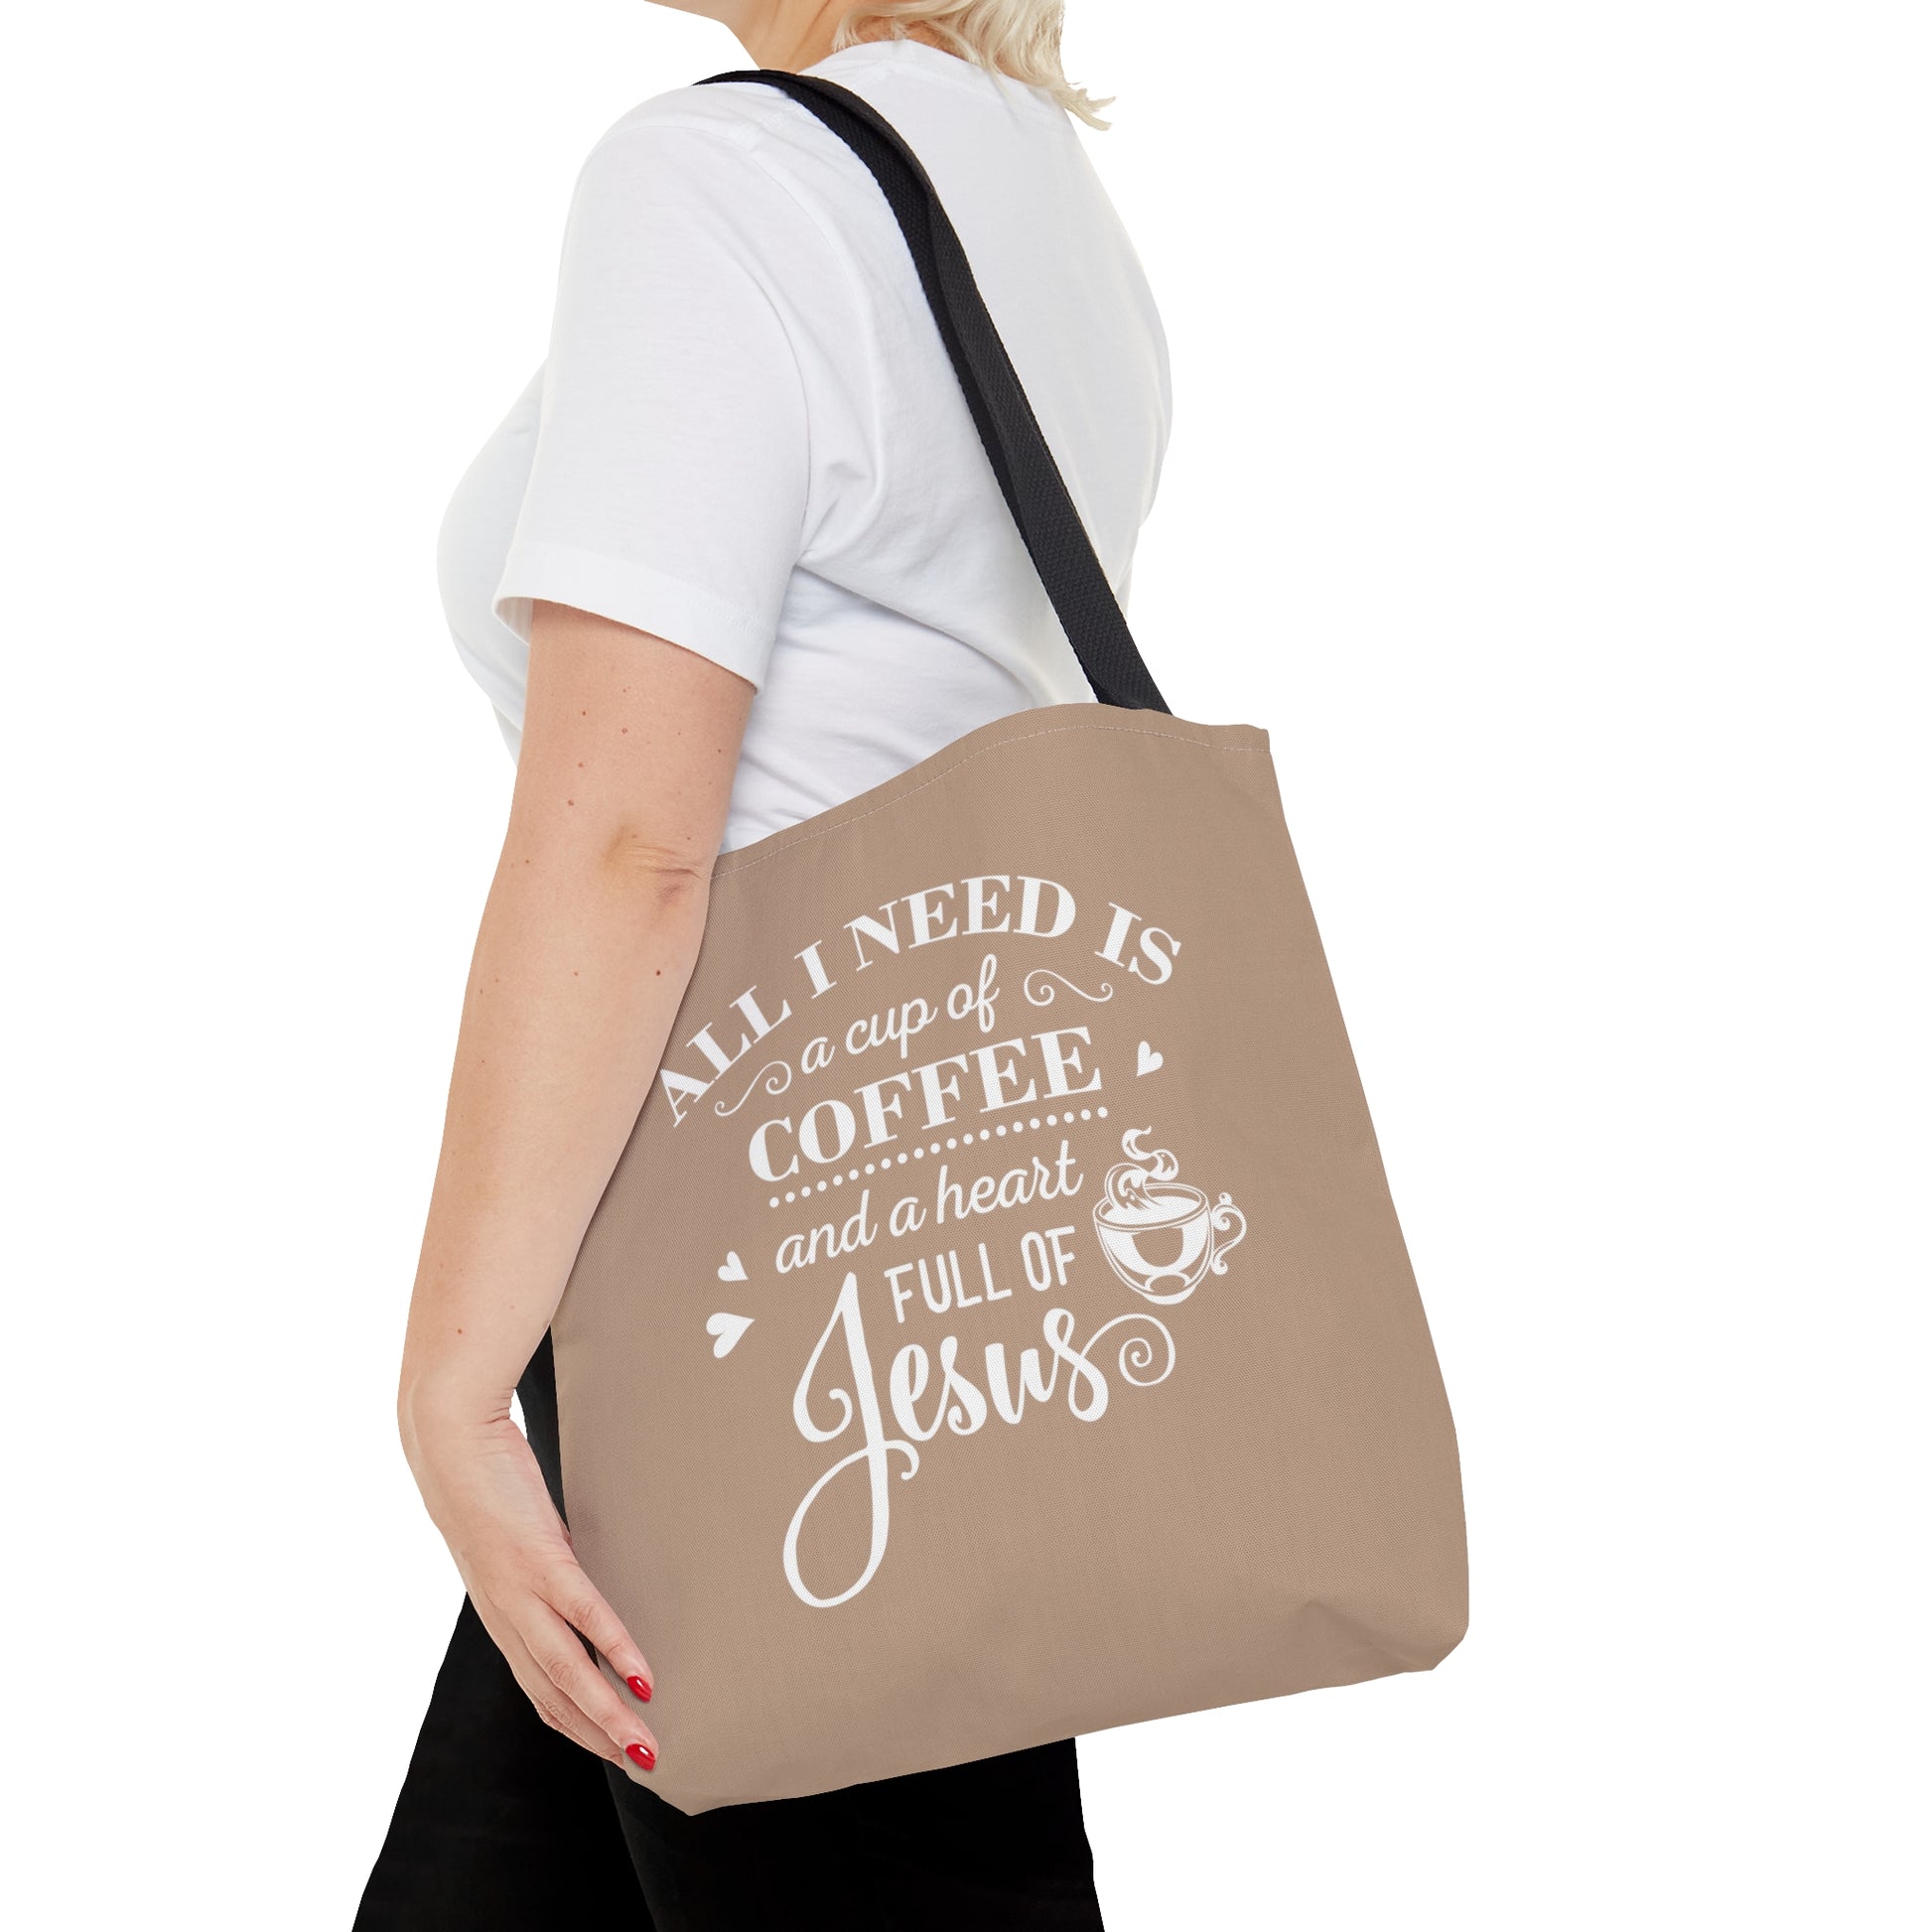 Coffee and Jesus Tote Bag | Christian Tote Bag - Amazing Faith Designs